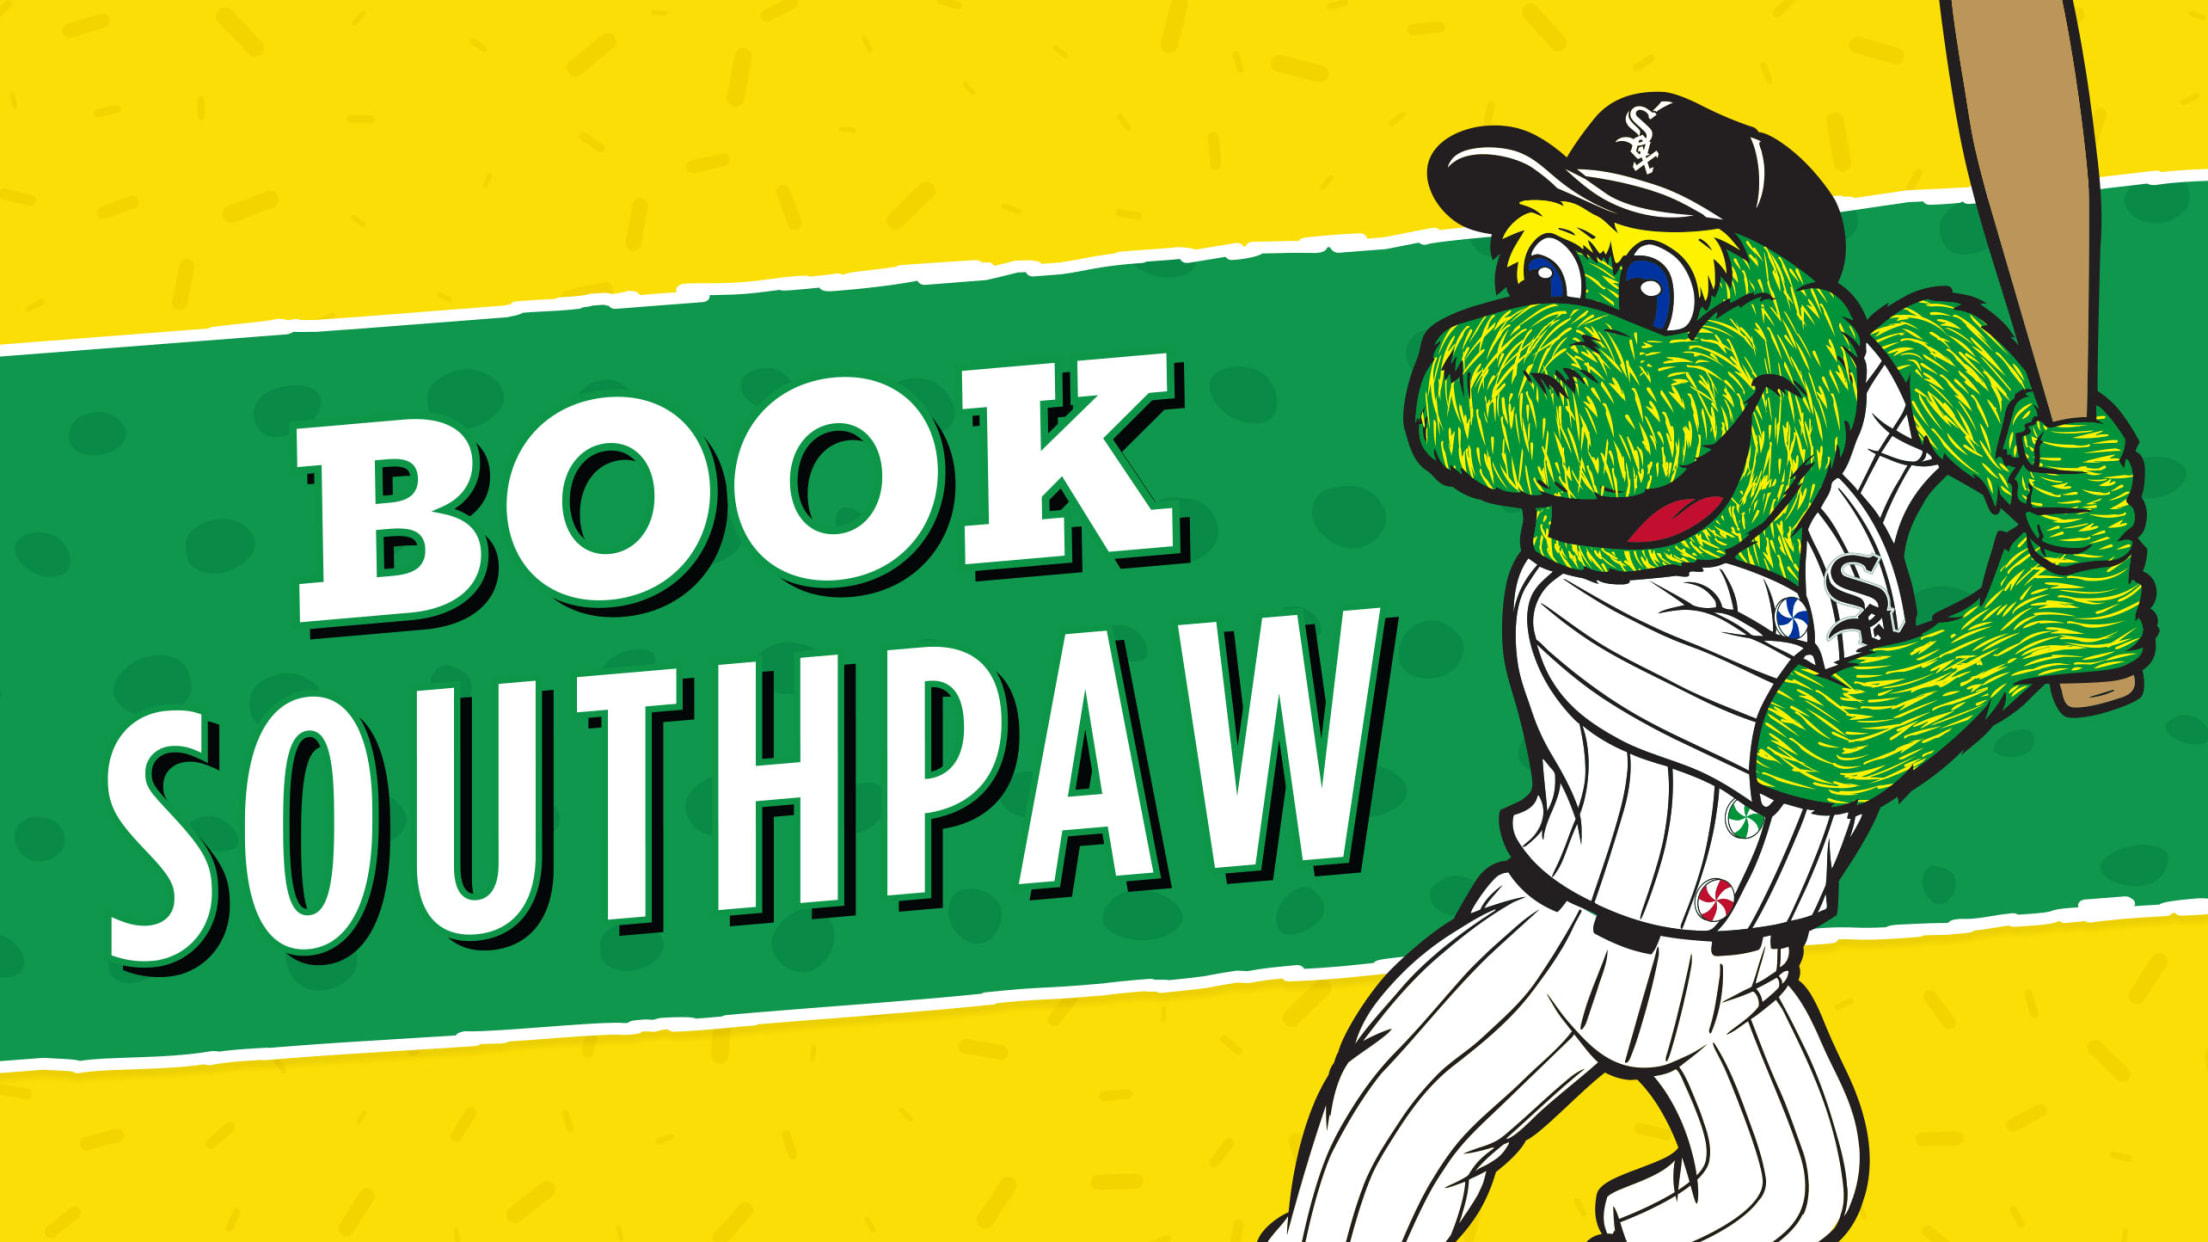 southpaw white sox mascot